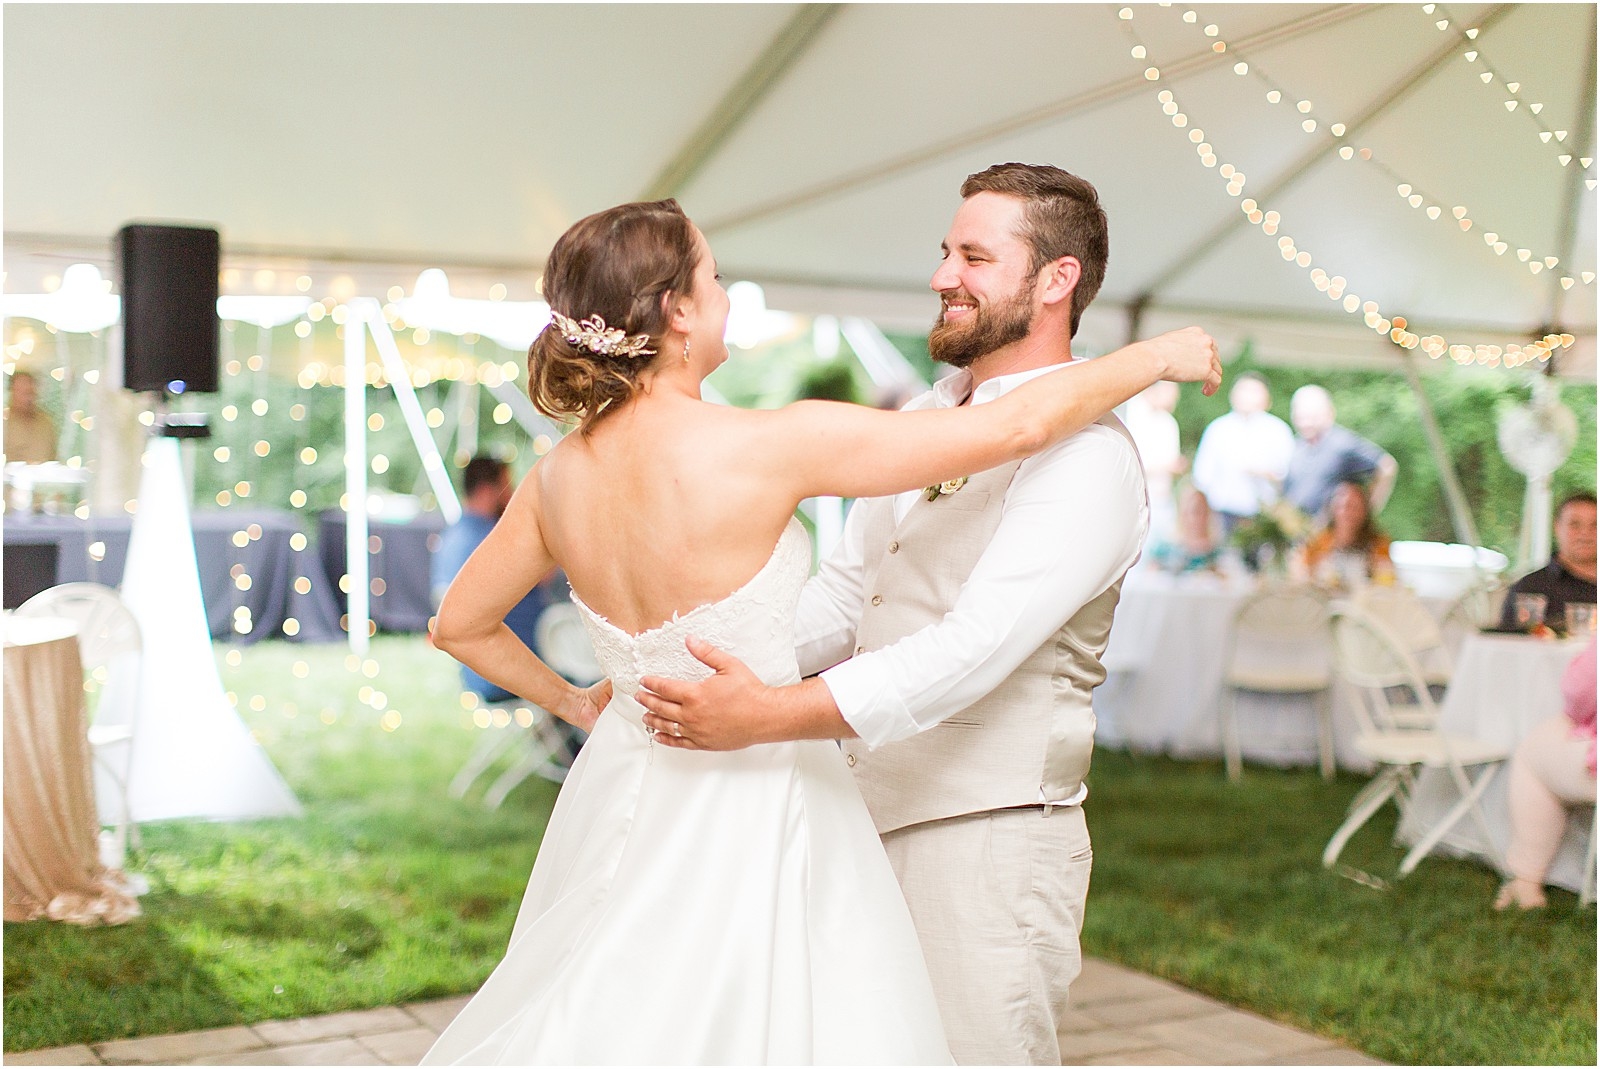 A Evansville Indiana Backyard Wedding | Bailey and Ben 086.jpg